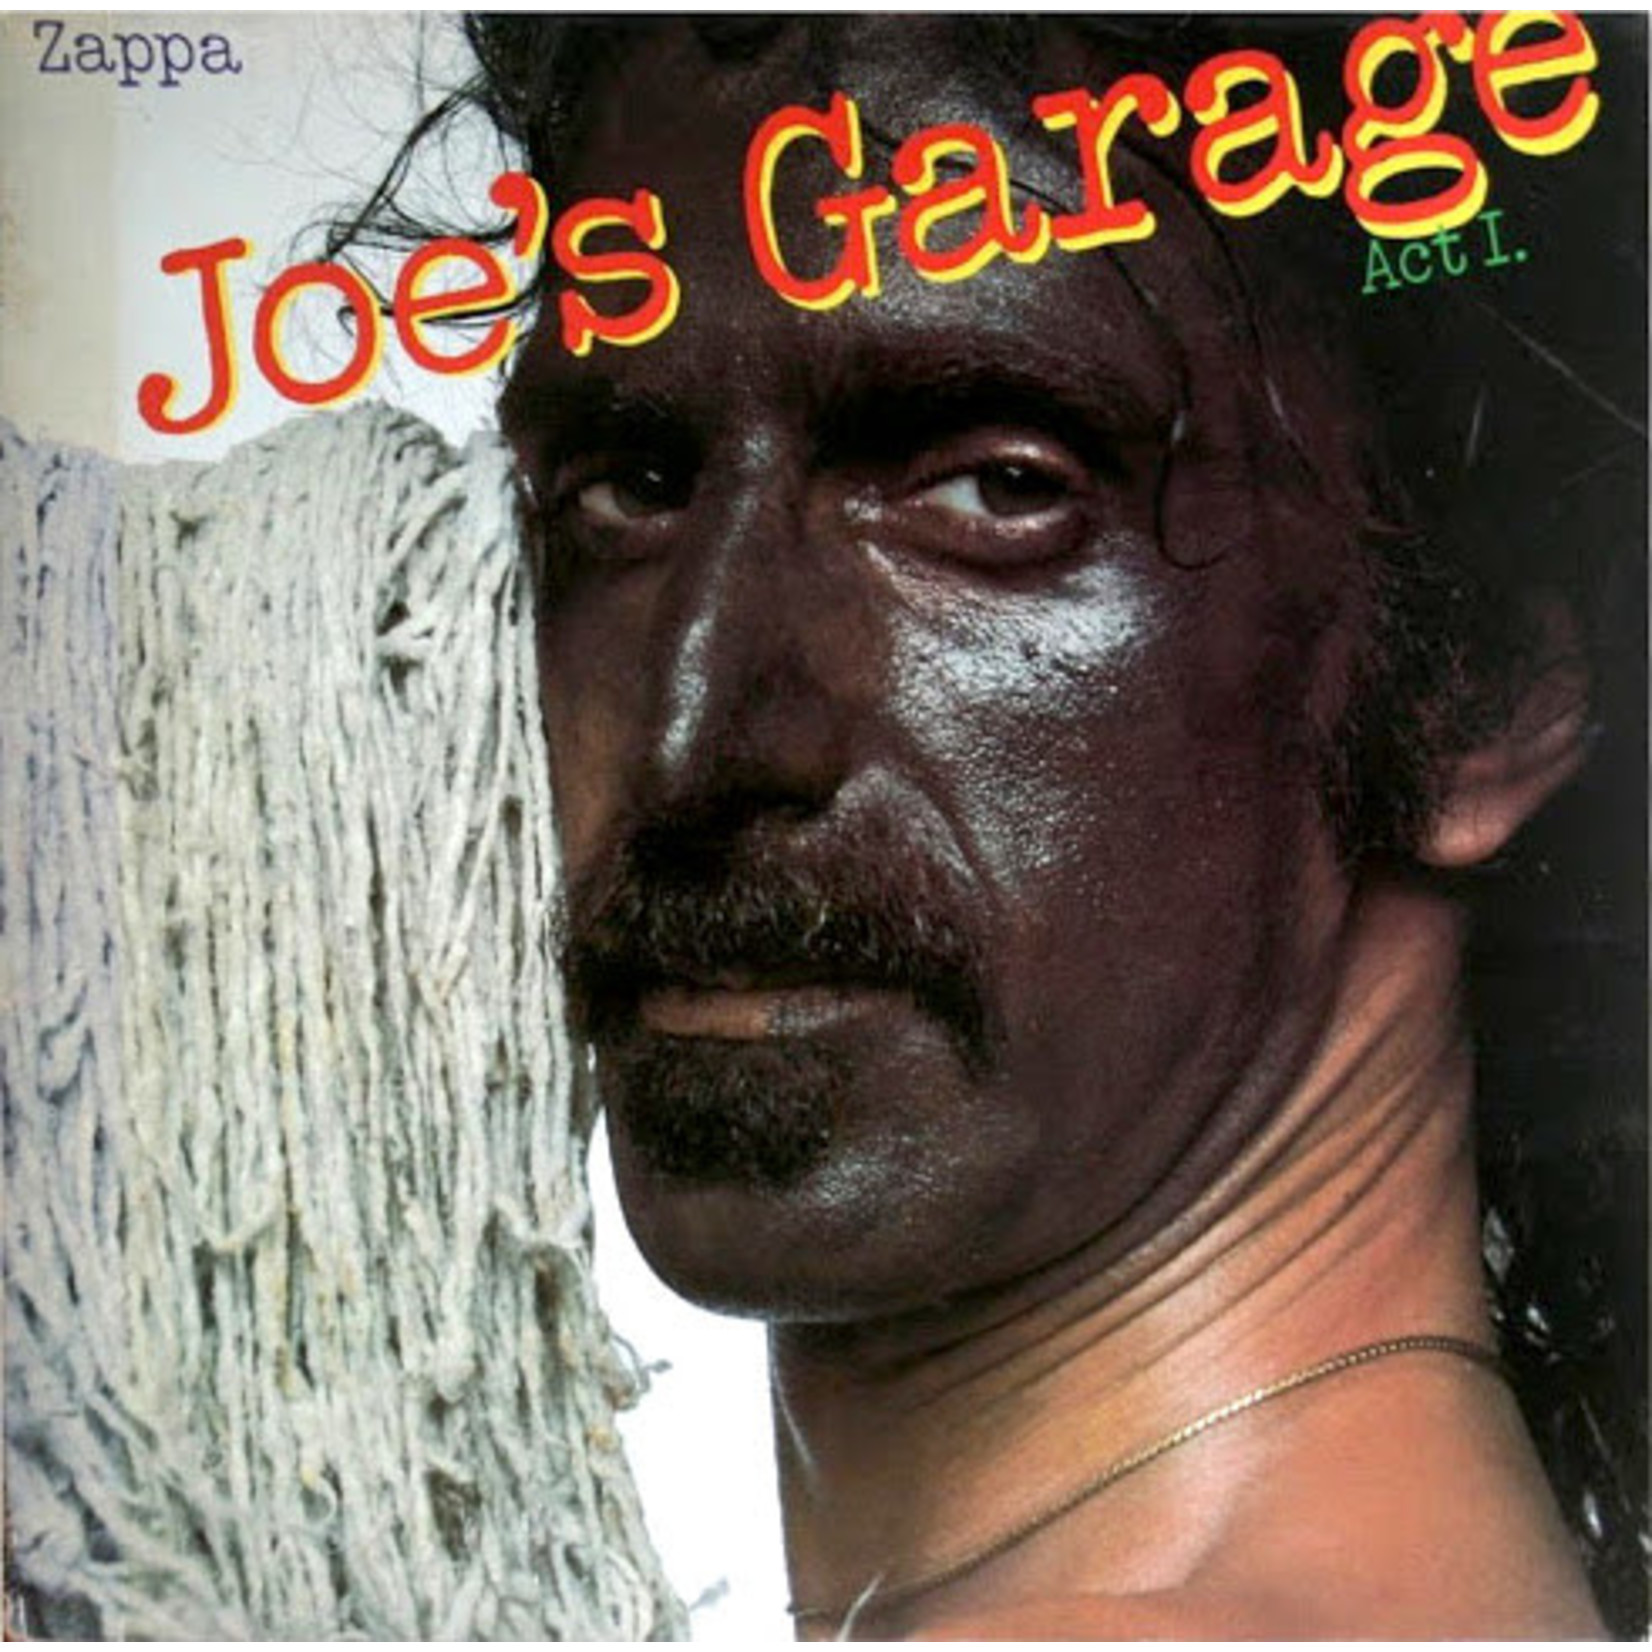 [Vintage] Frank Zappa - Joe's Garage